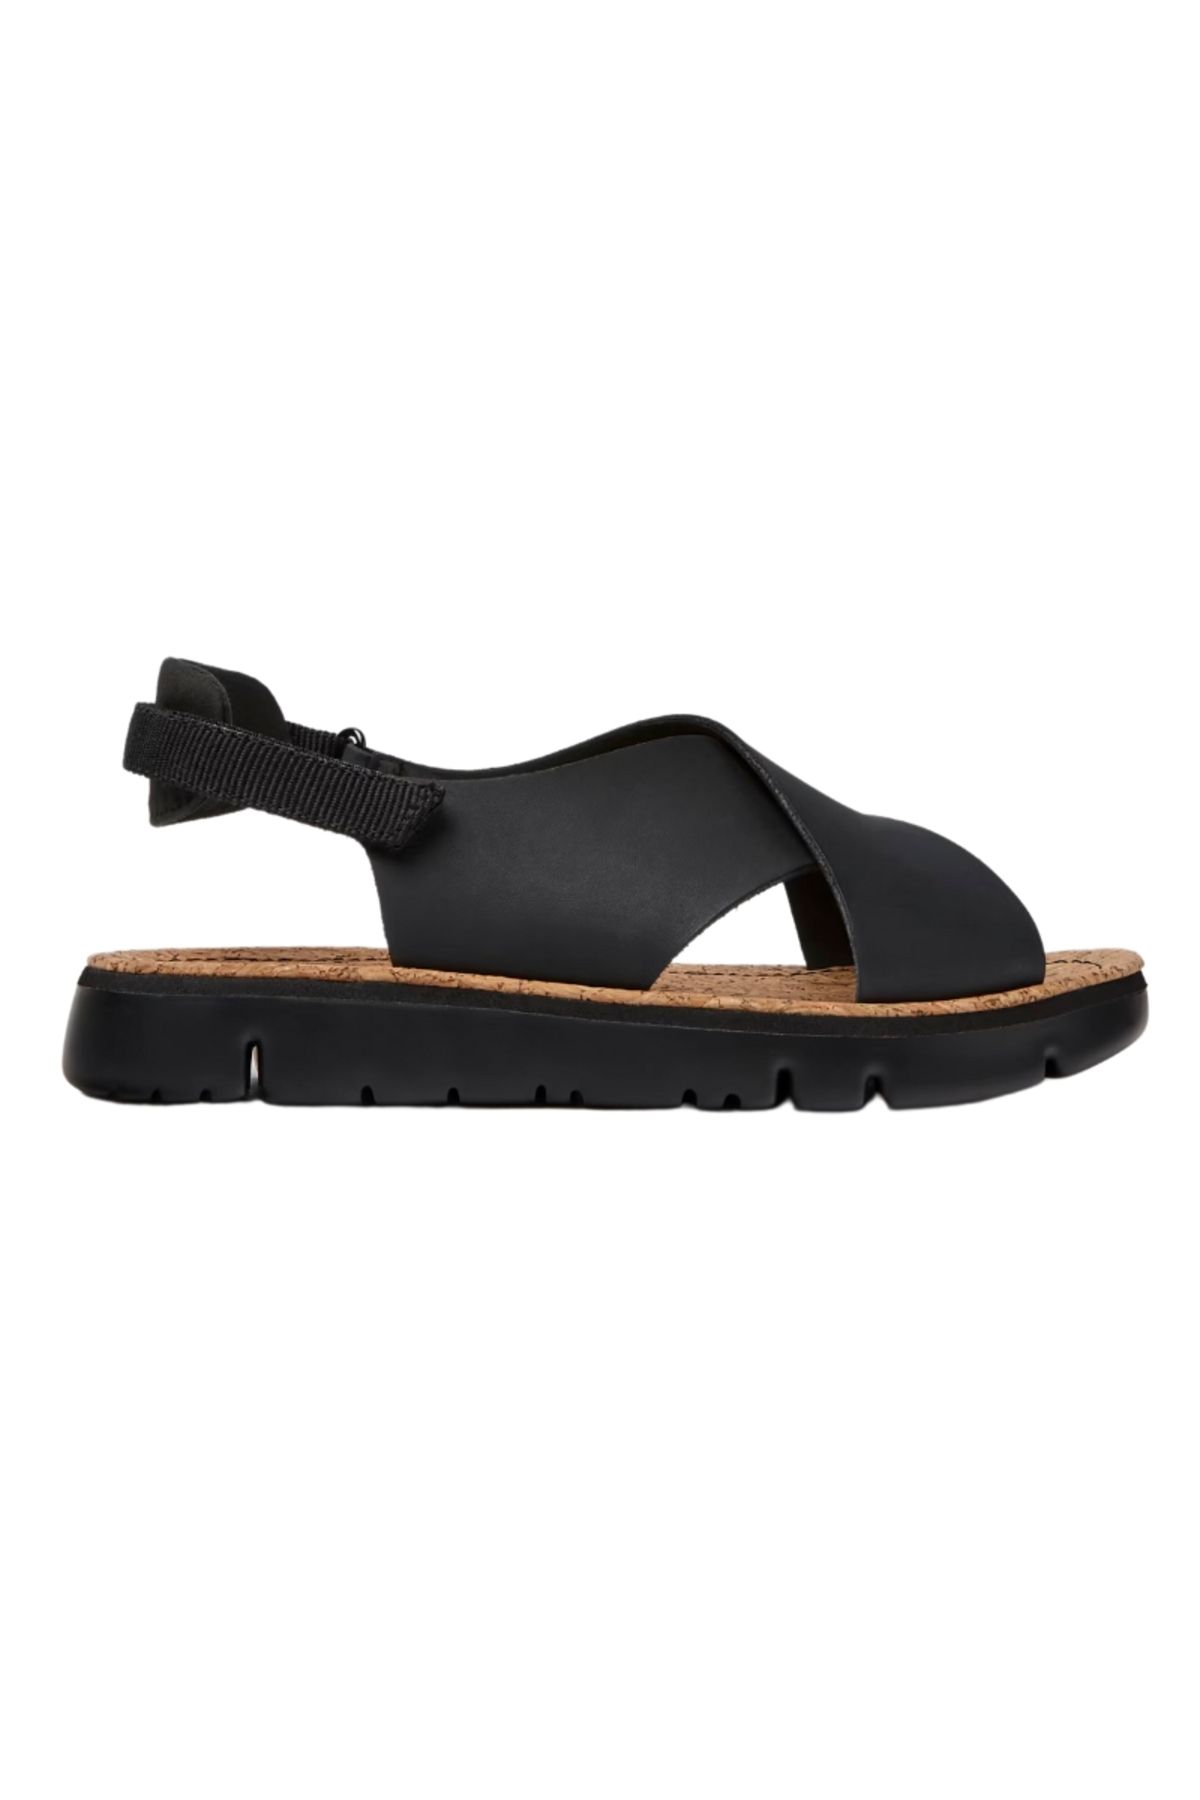 CAMPER Kadın Siyah Casual Ayakkabı K200157-022-siyah